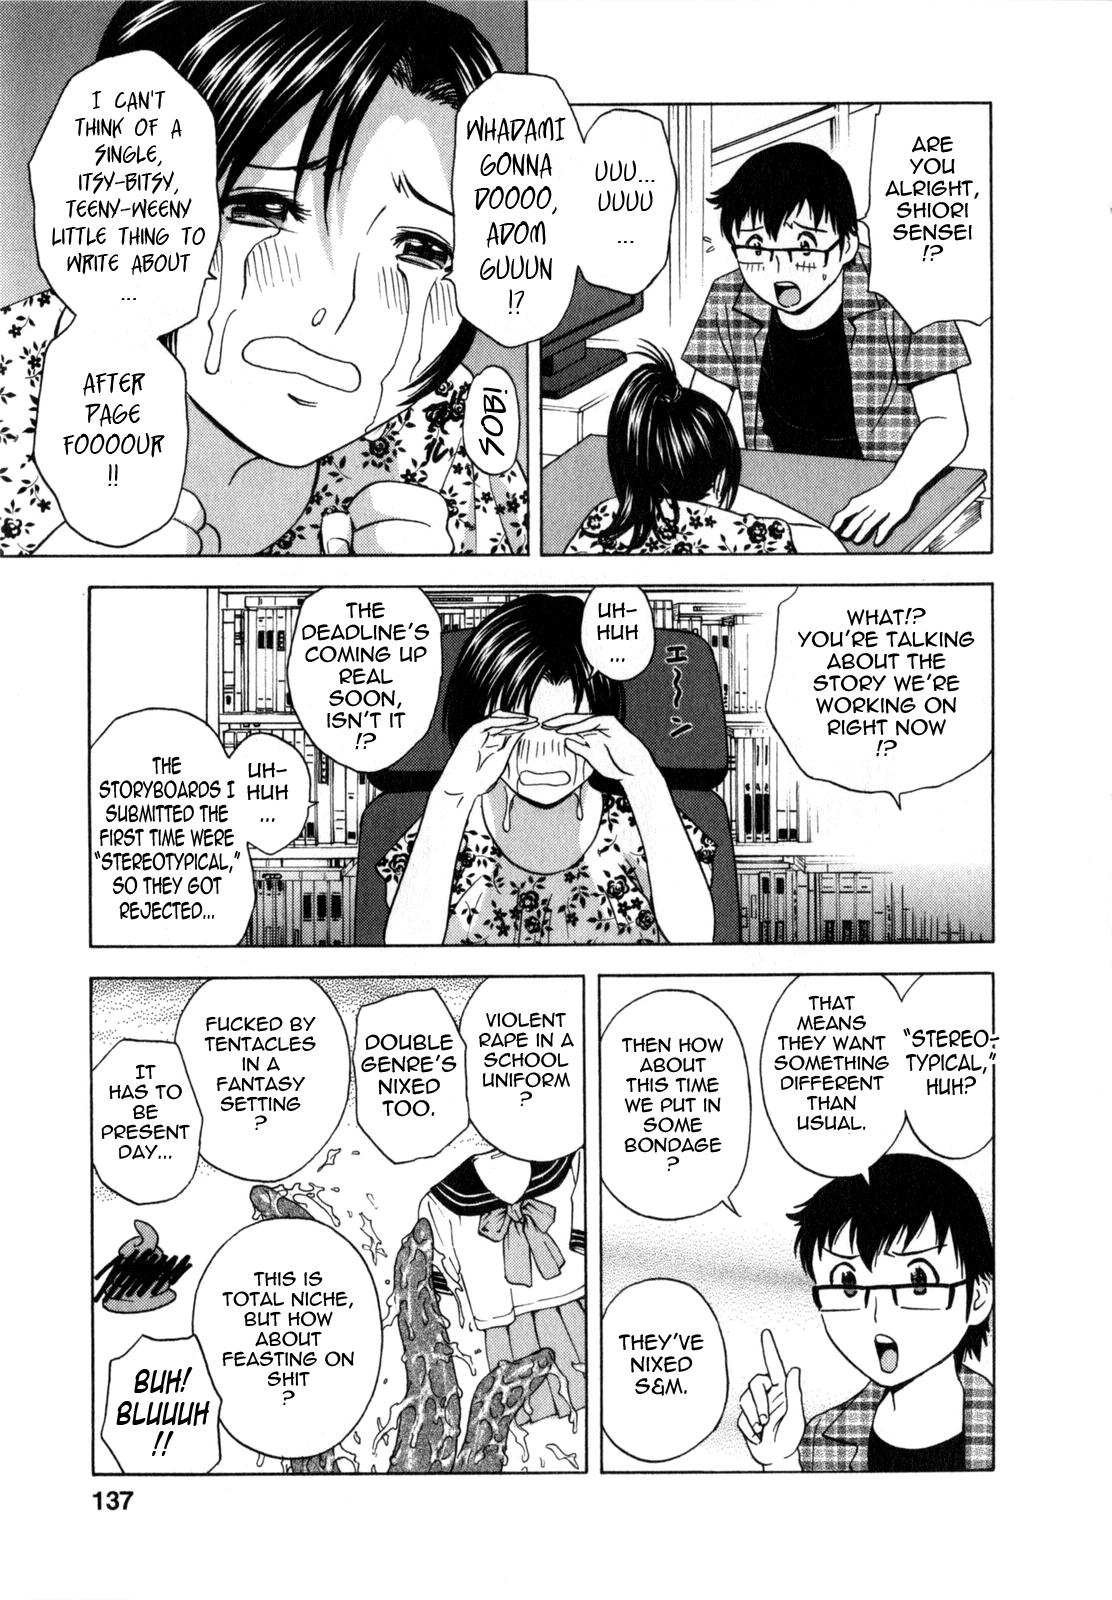 [Hidemaru] Life with Married Women Just Like a Manga 1 - Ch. 1-9 [English] {Tadanohito} 144